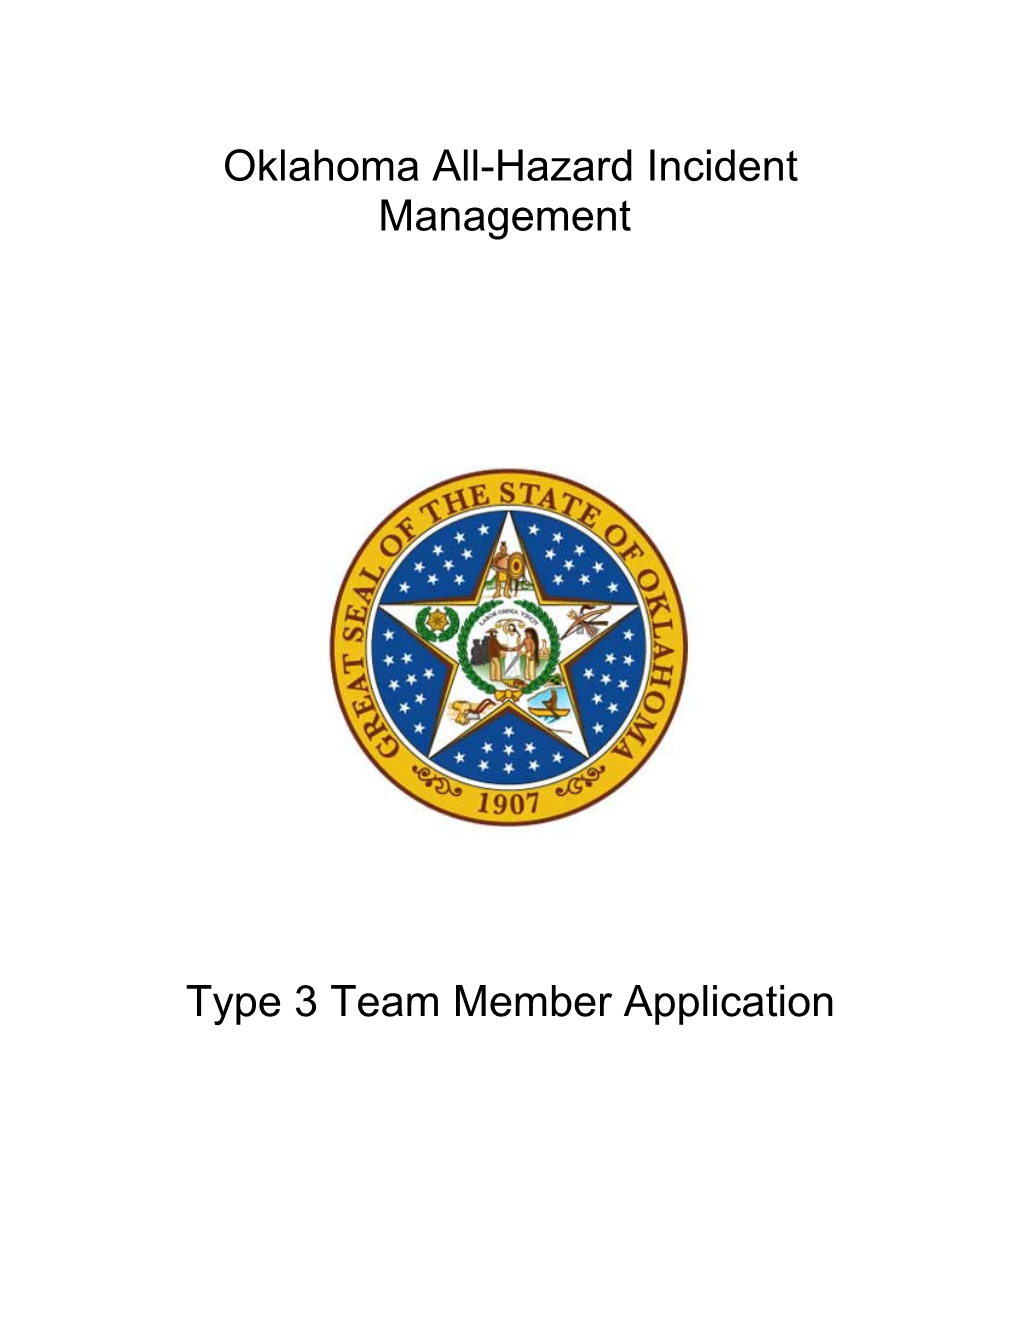 Oklahoma All-Hazard Incident Management Type 3 Team Member Application